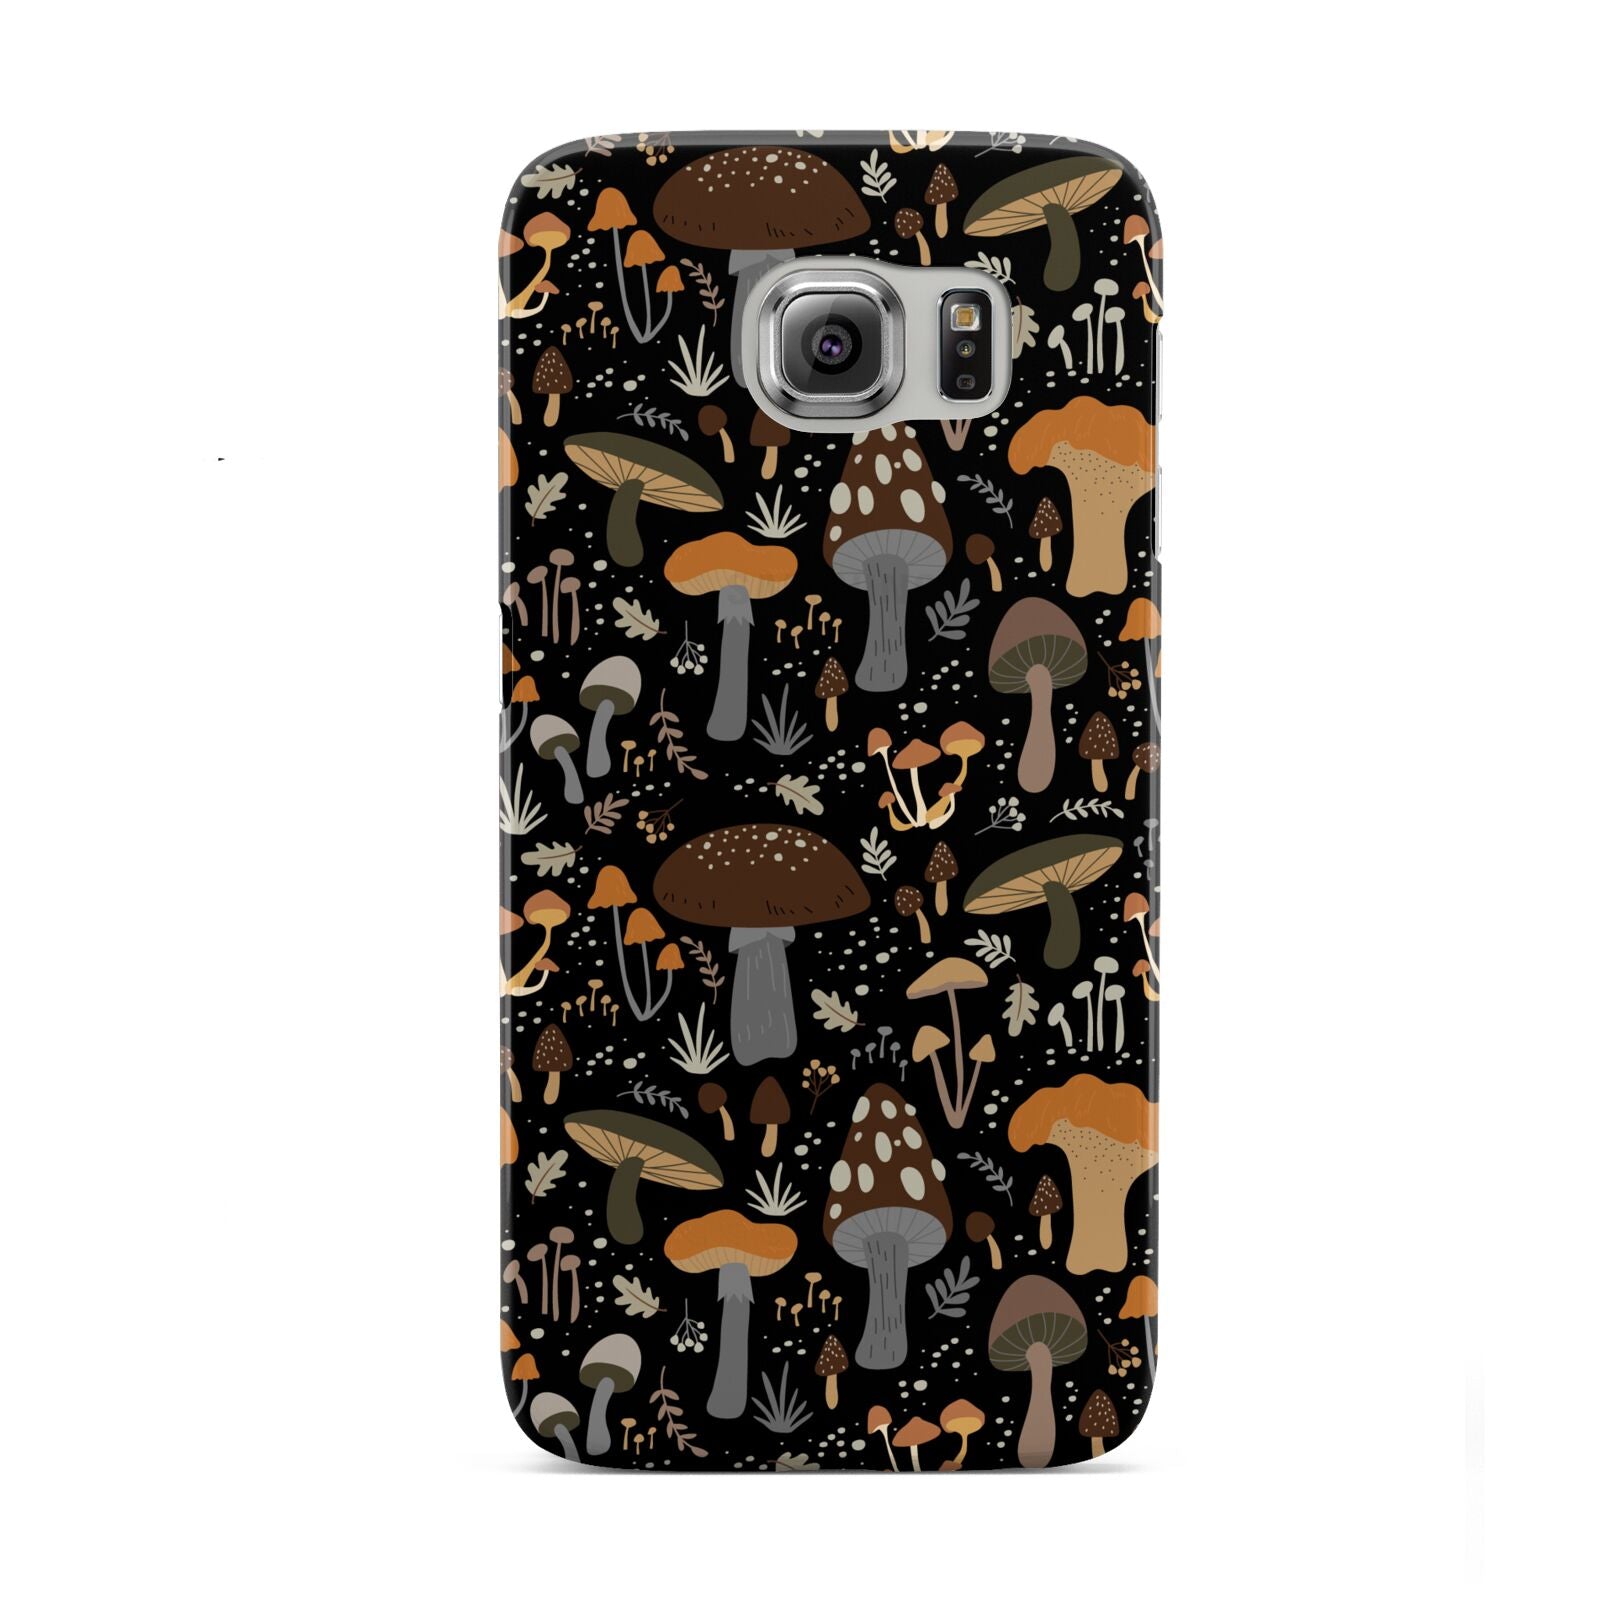 Mushroom Samsung Galaxy S6 Case